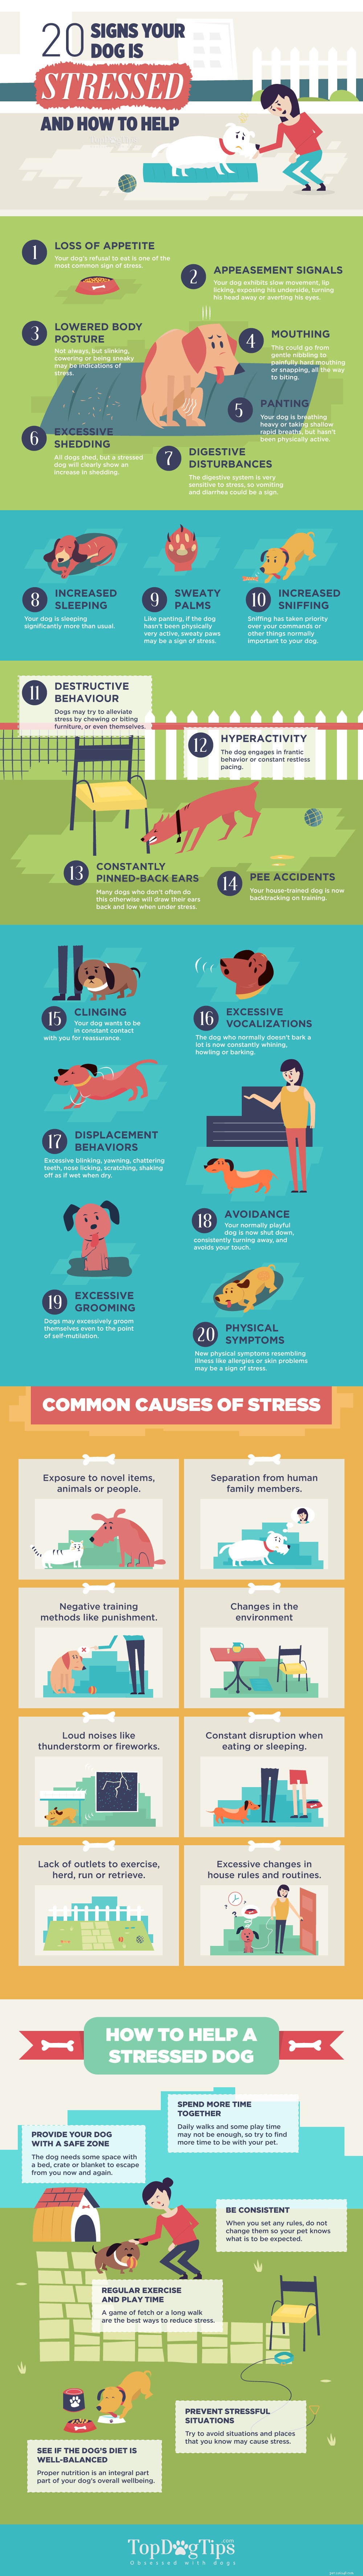 20 признаков стресса у собак [инфографика]